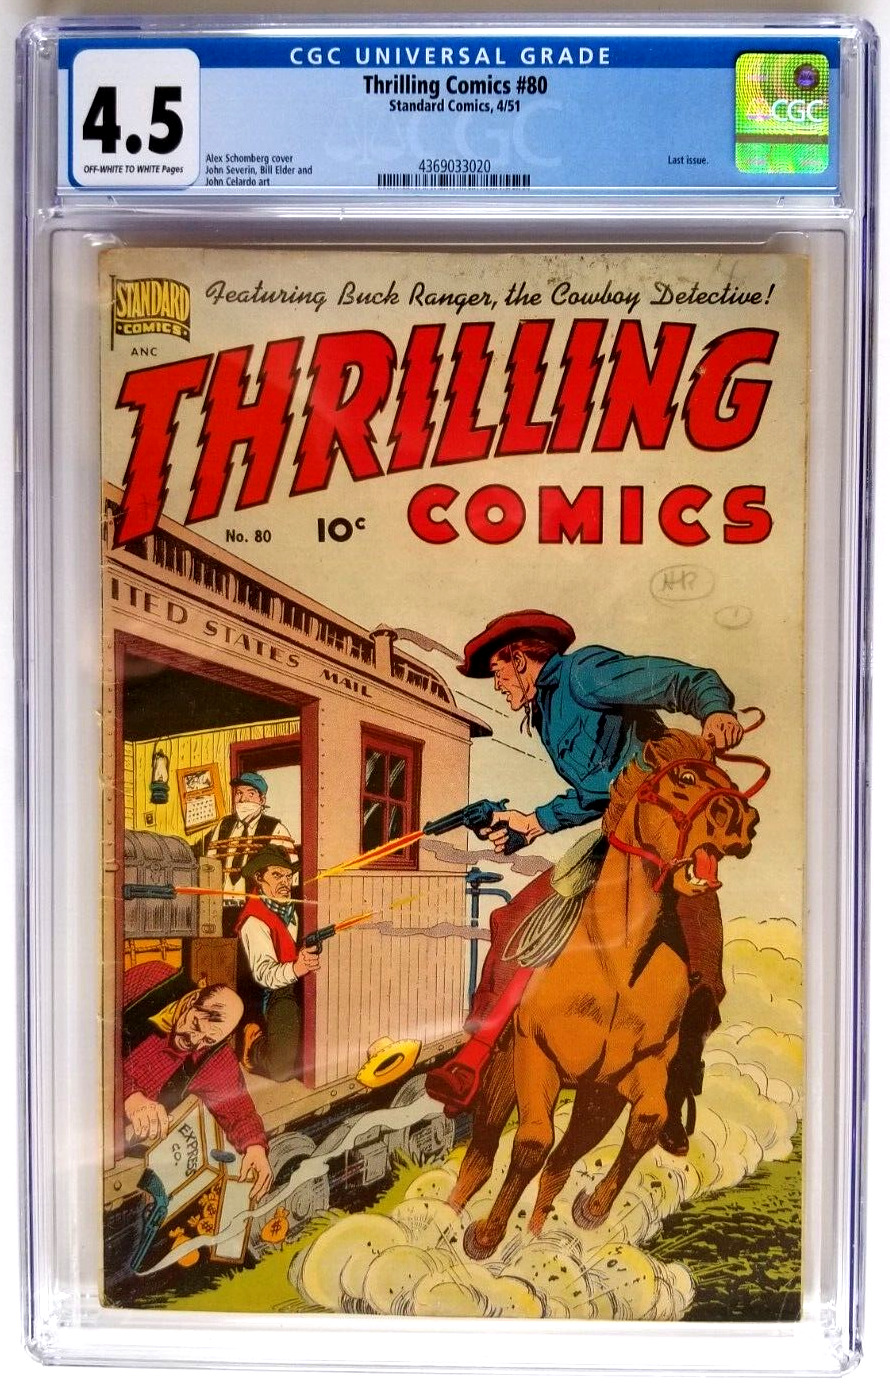 THRILLING COMICS #80 CGC VG+ 4.5 STANDARD 1951 ALEX SCHOMBURG COVER. LAST ISSUE